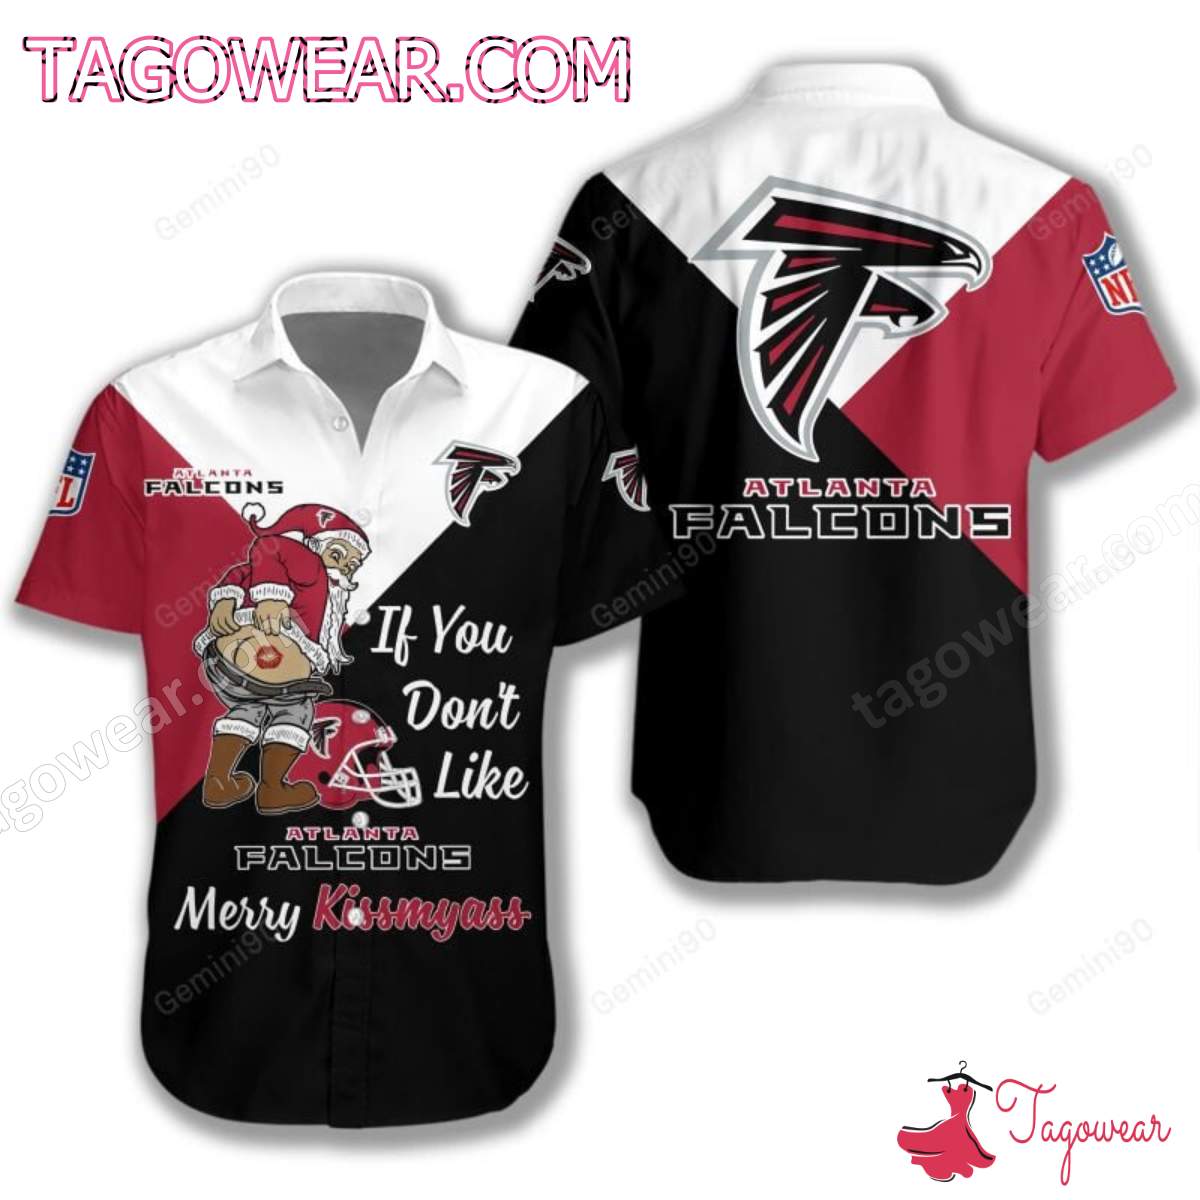 If You Don't Like Atlanta Falcons Merry Kissmyass T-shirt, Polo, Hoodie a